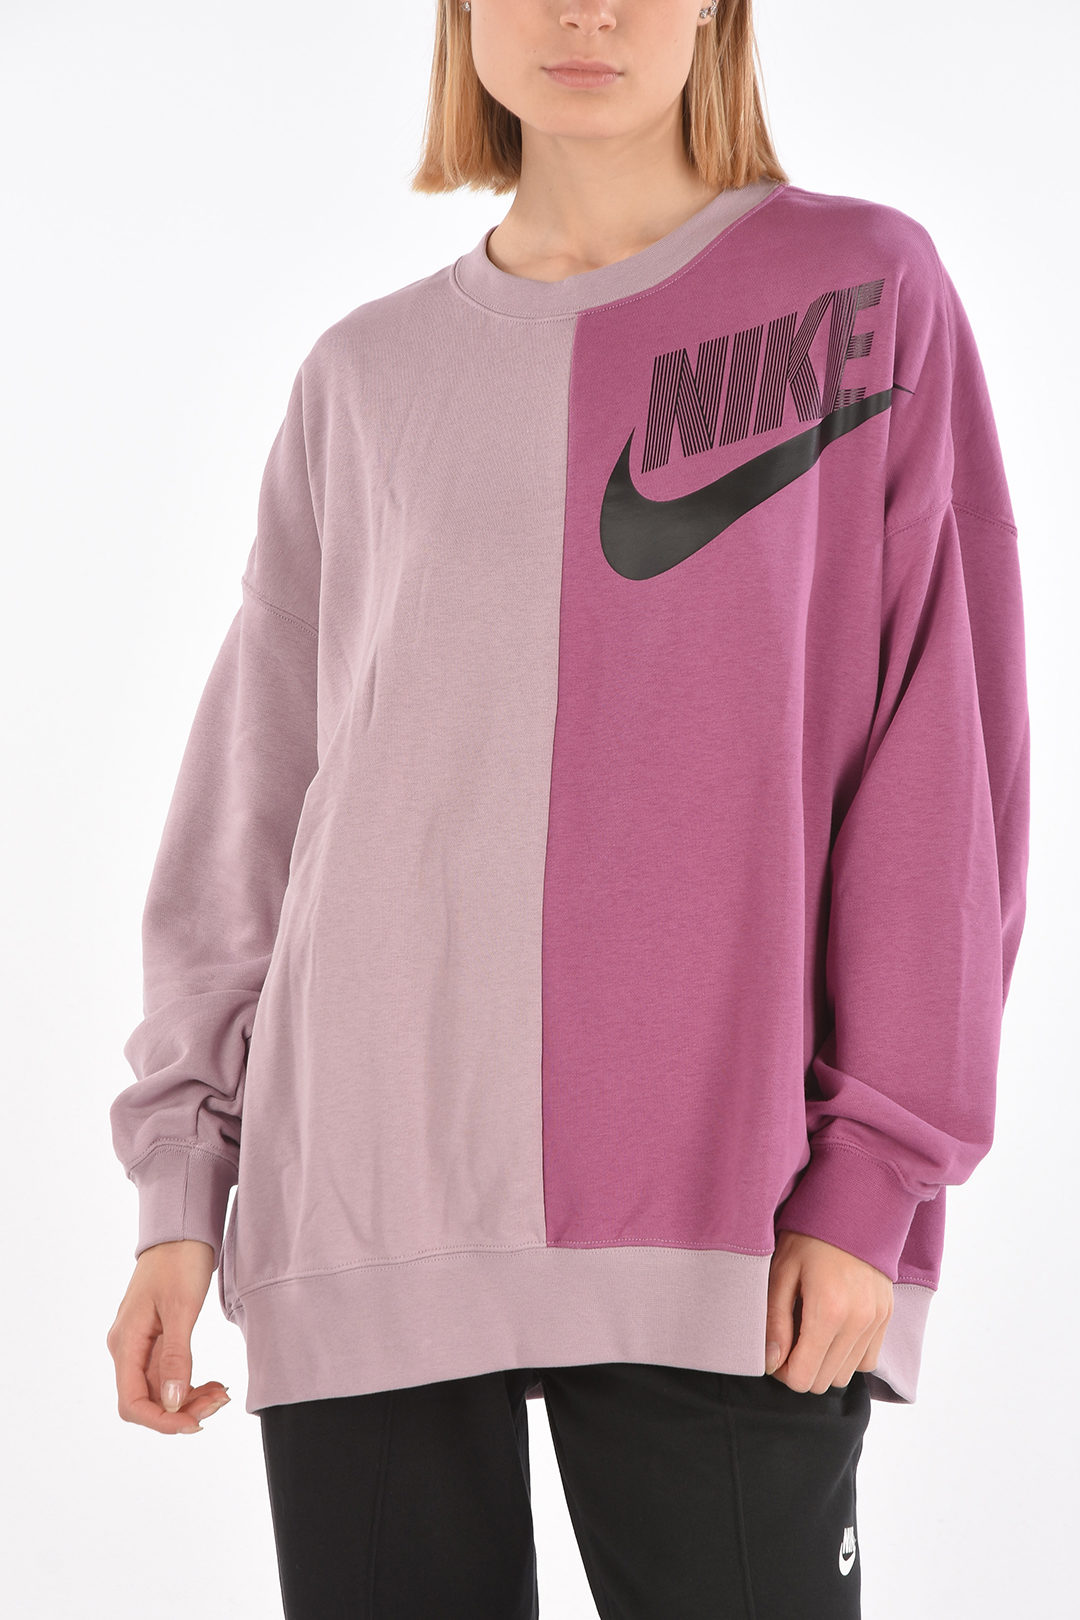 Normalmente filete Digital Nike Logo Printed Sweatshirt women - Glamood Outlet